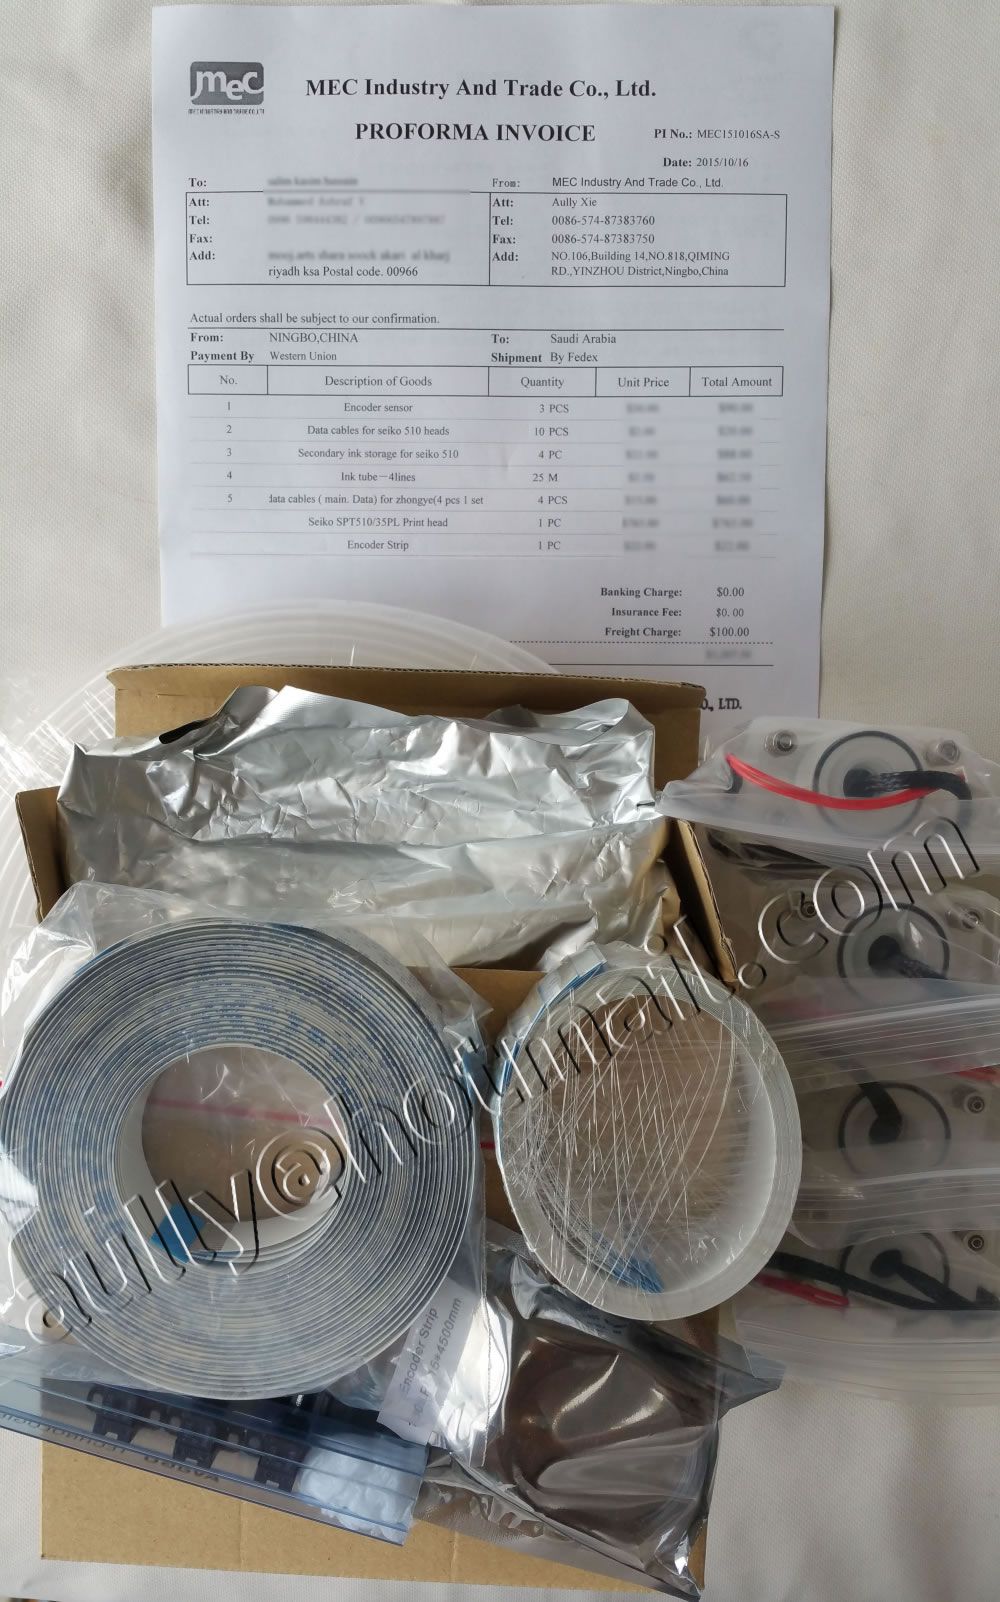 MEC151016SA-S (Seiko SPT510/35PL printhead/Ink Tank/Printhead data cable/Encoder Sensor/Ink Tube) to Saudi Arabia